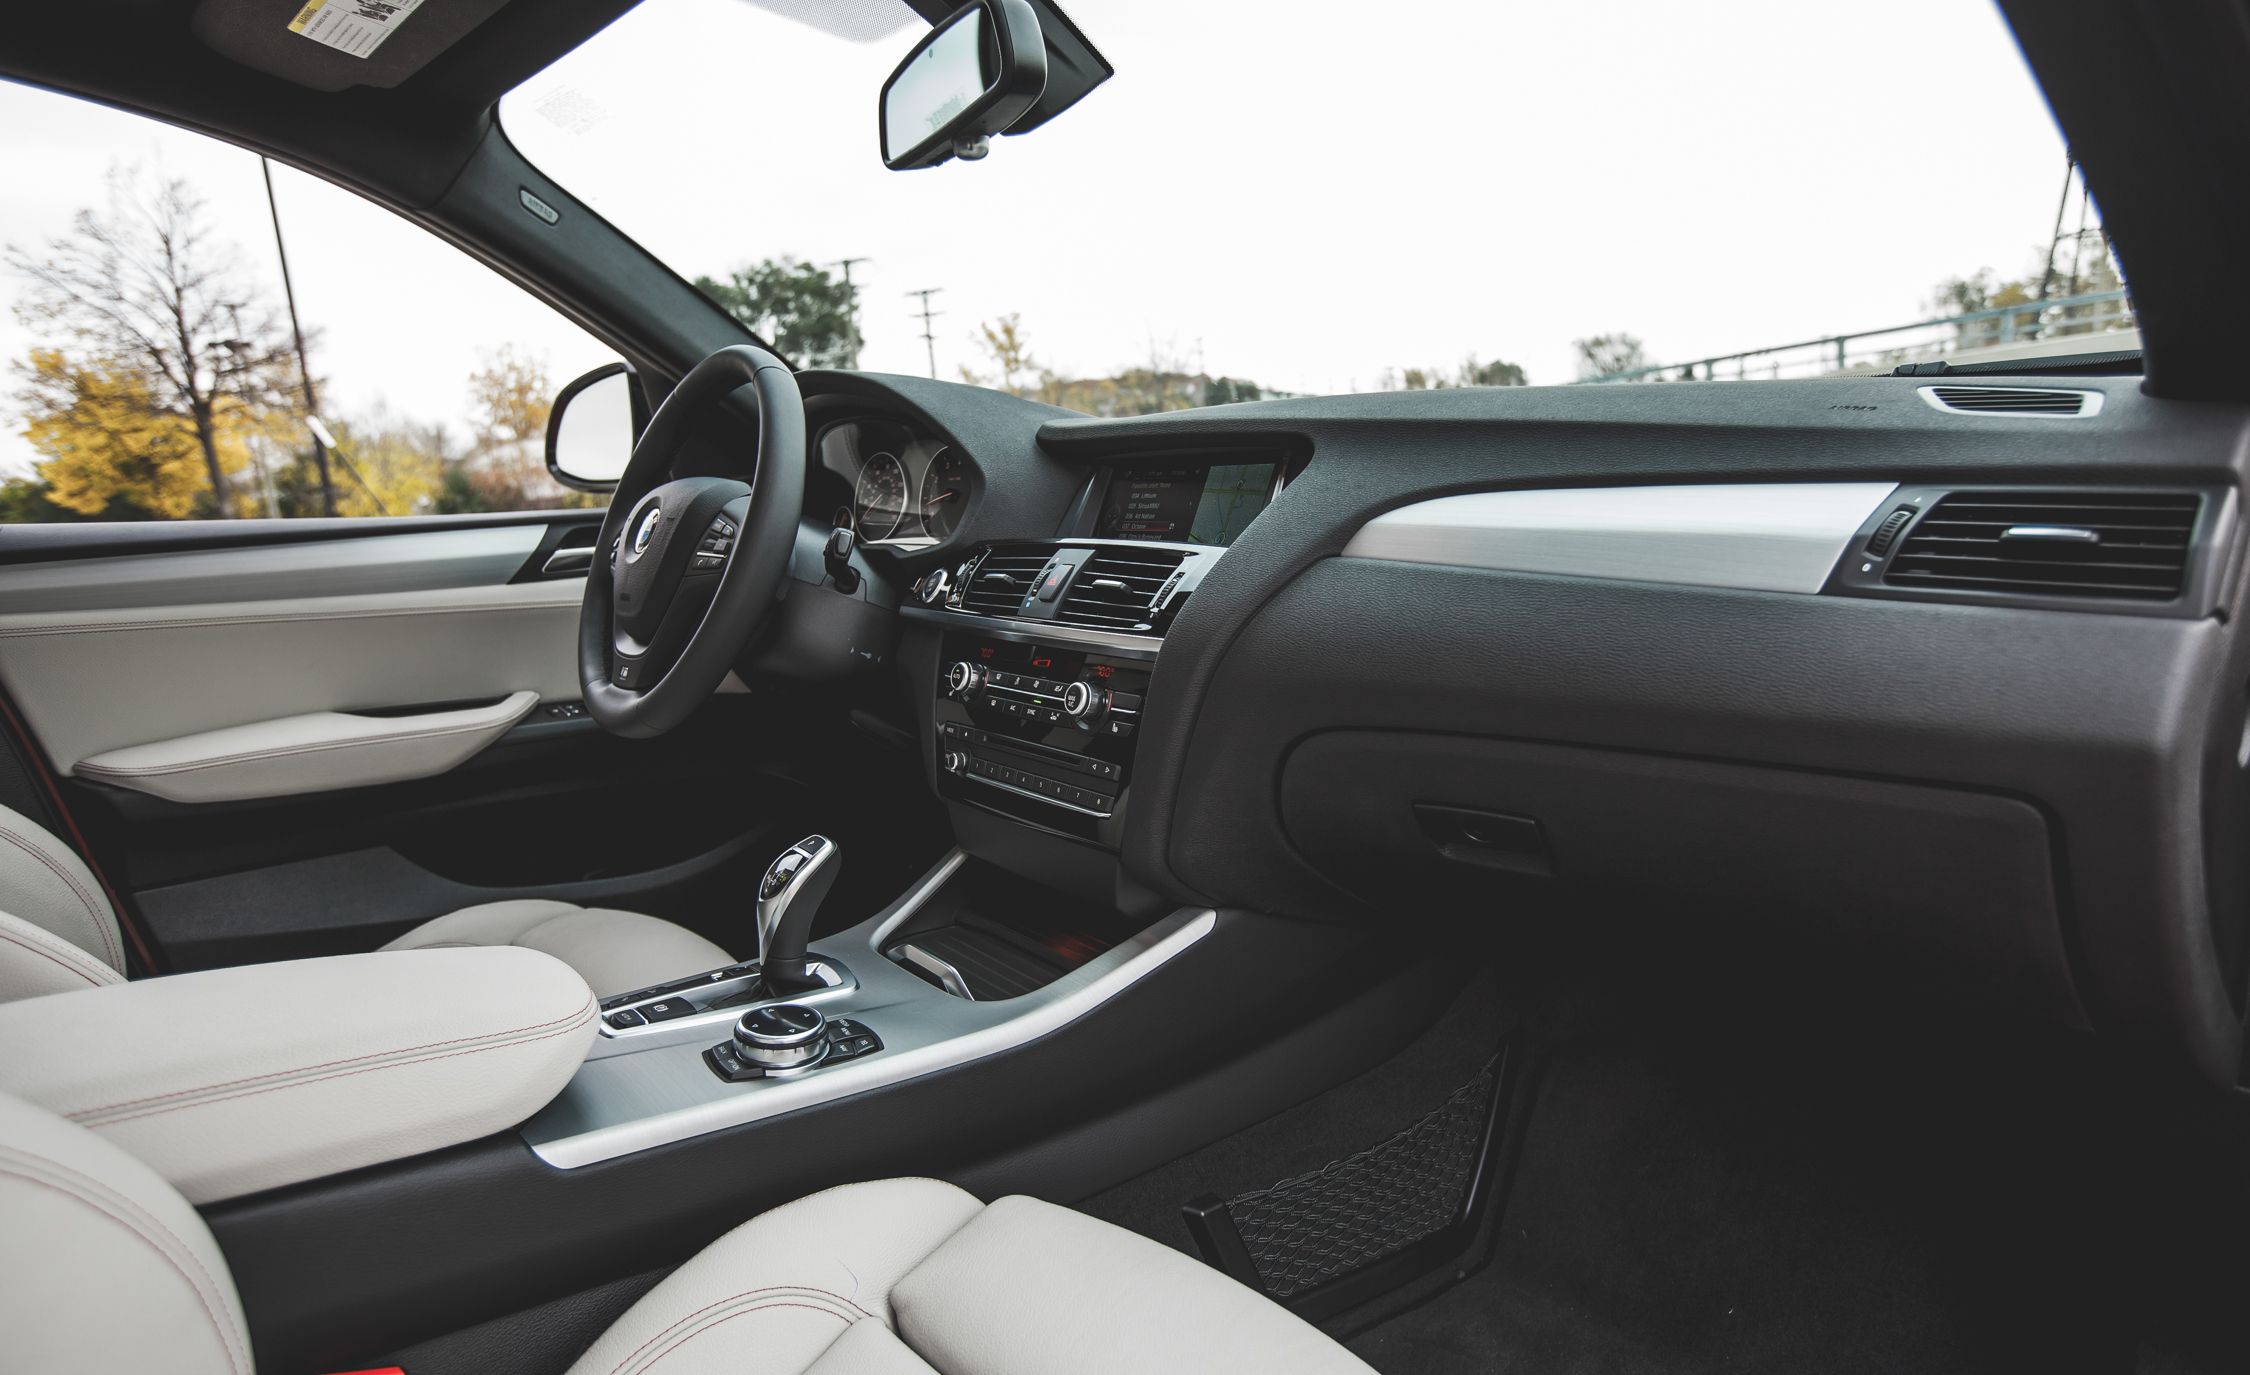 2015 BMW X4 XDrive28i Interior (View 8 of 29)